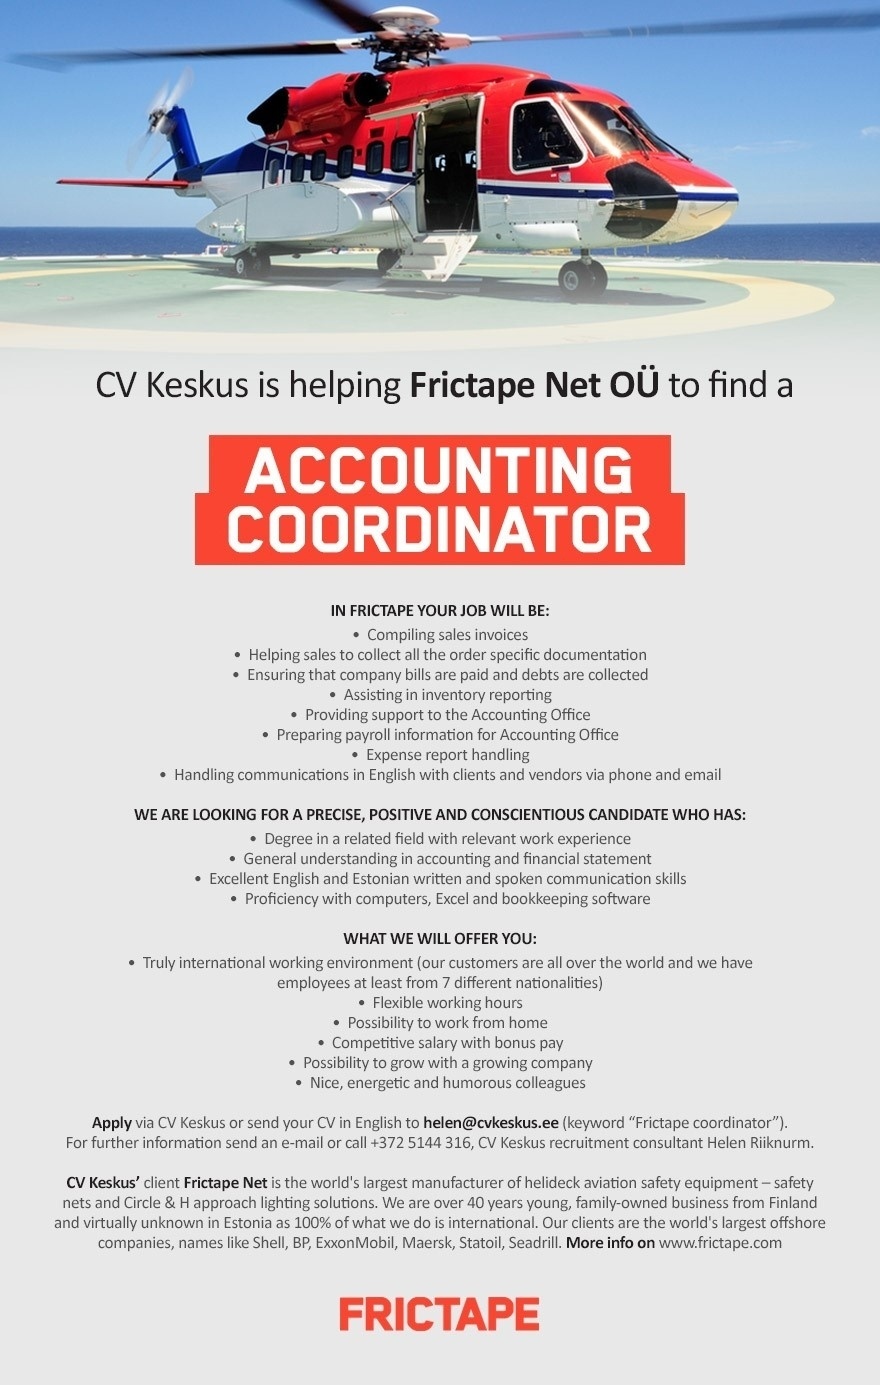 FRICTAPE NET OÜ Accounting coordinator